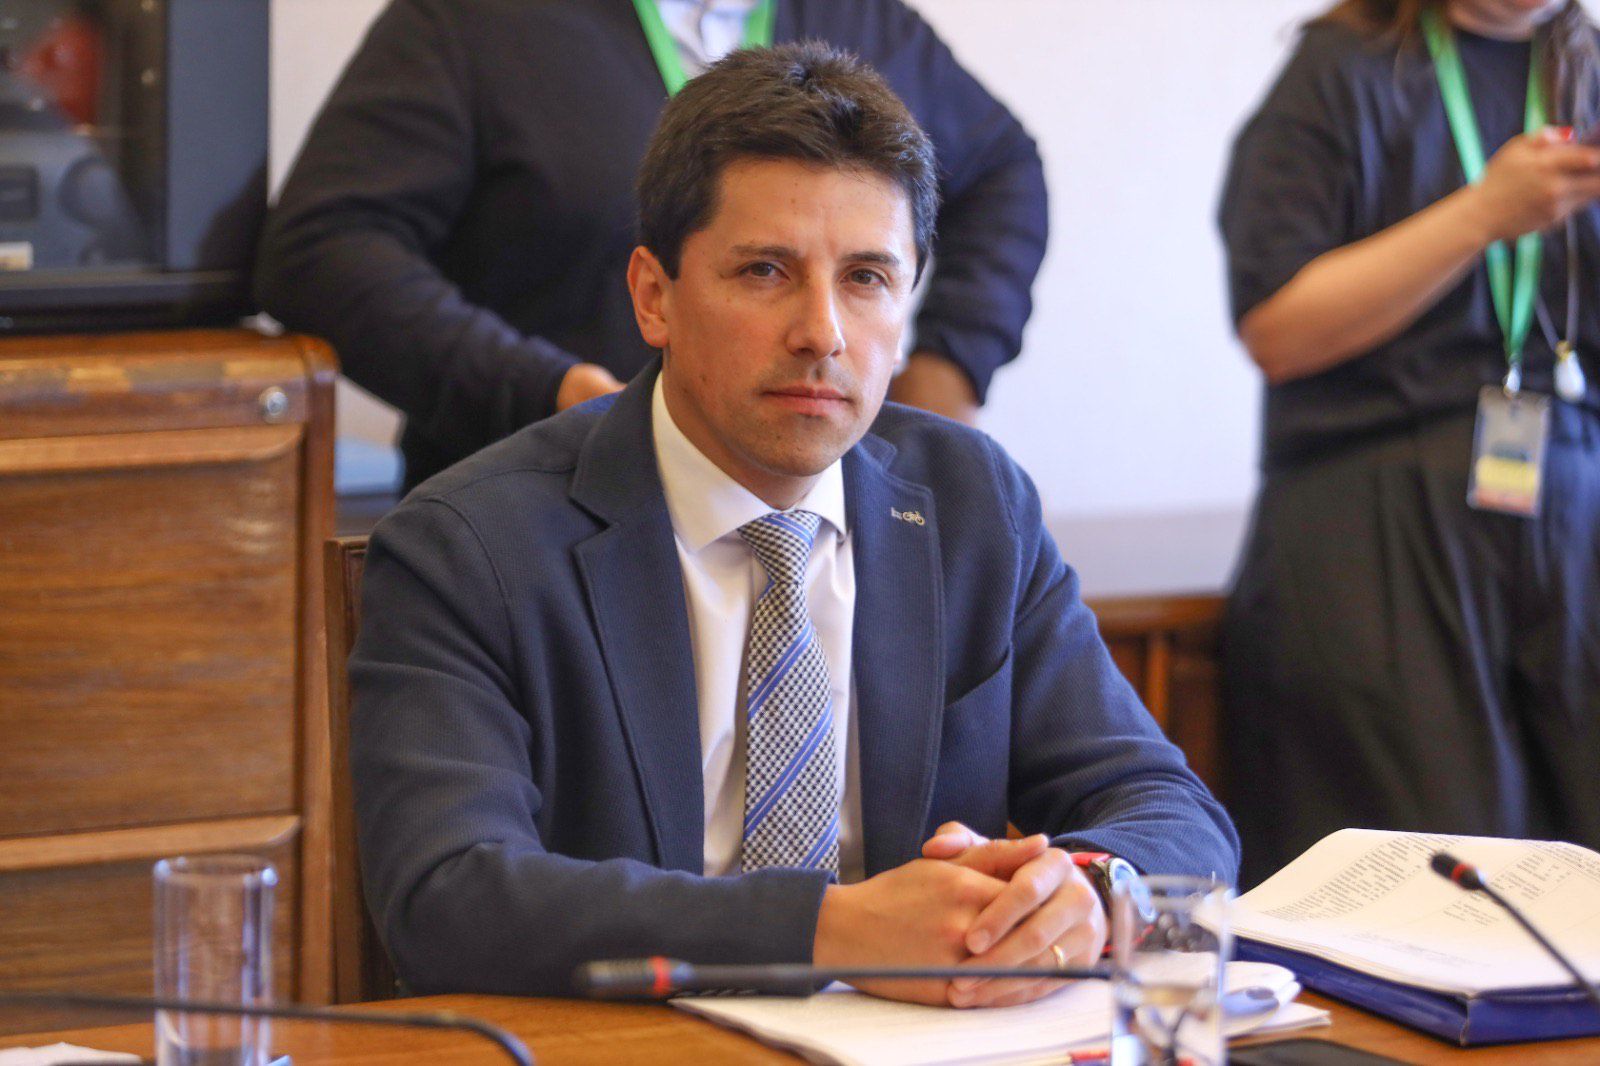 diputado gonzález (rn) propone ley para que aerolíneas entreguen nómina de pasajeros al ministerio del interior